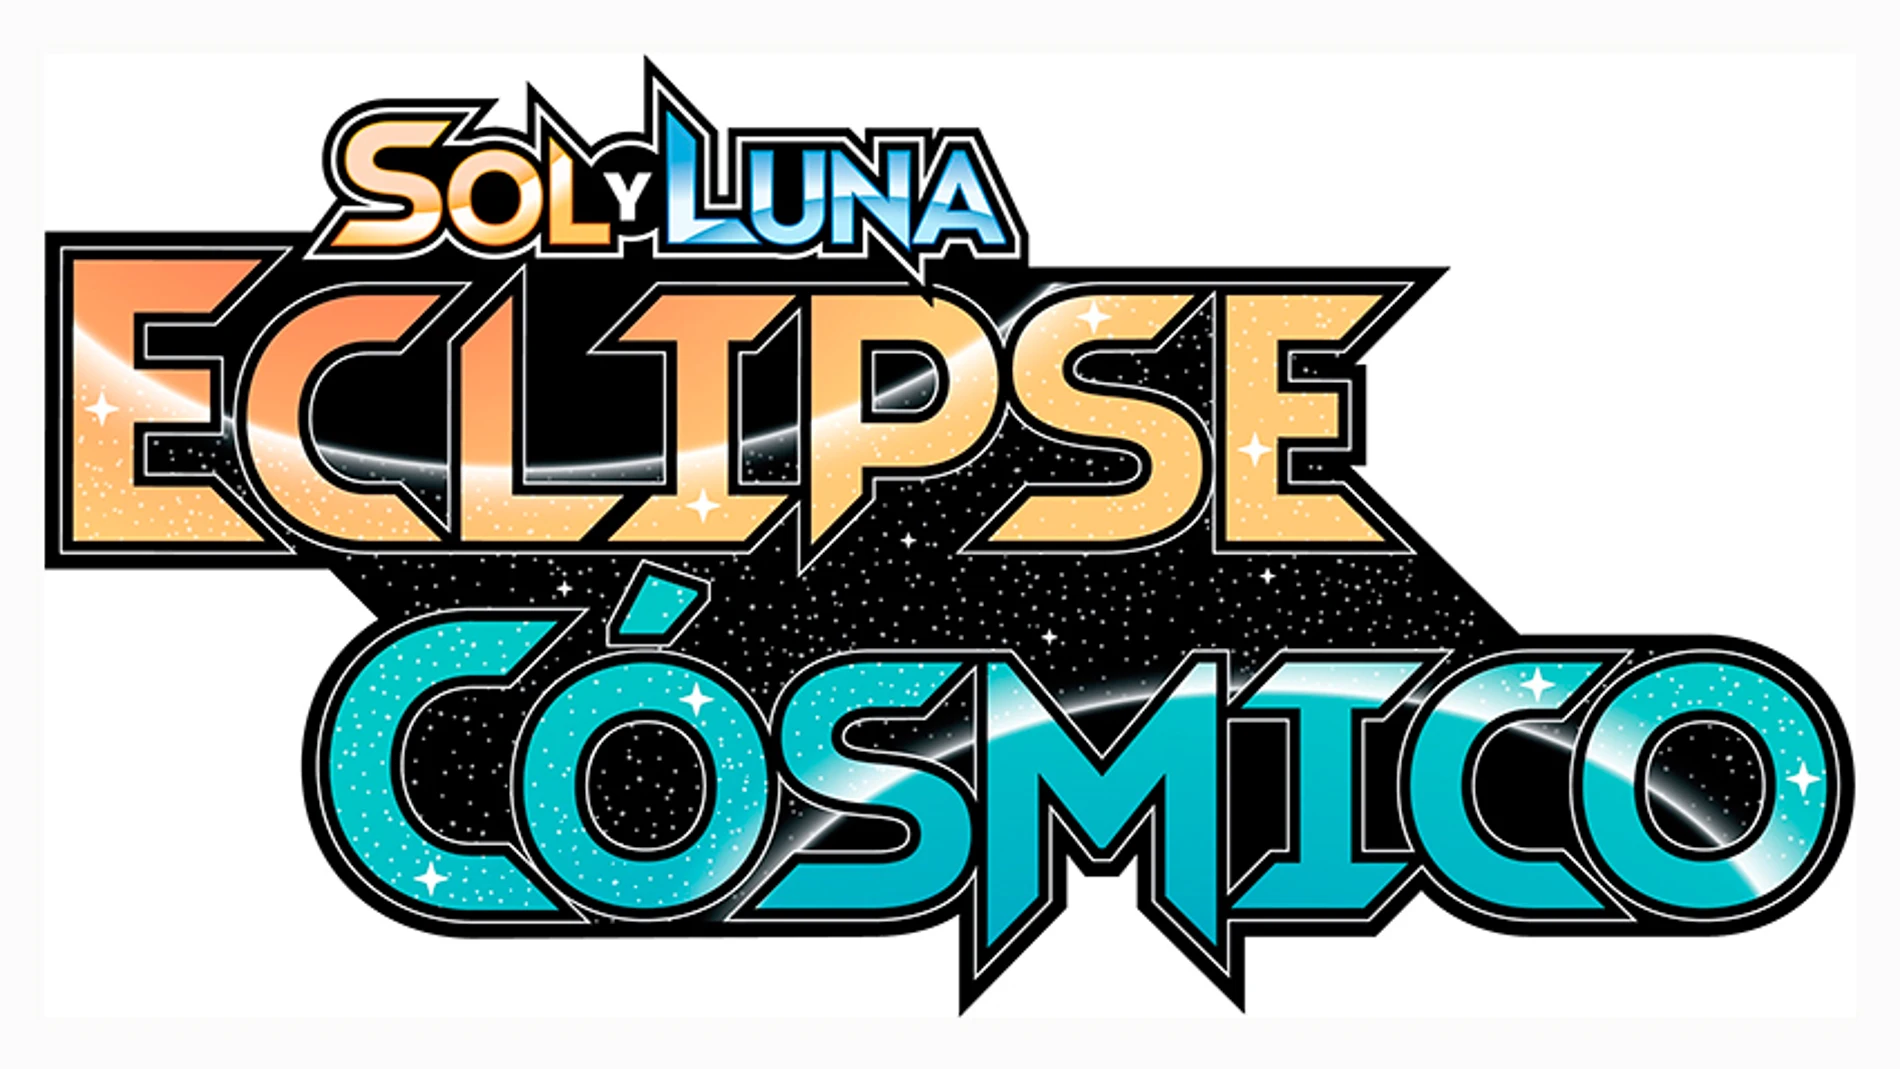 Eclipse cósmico